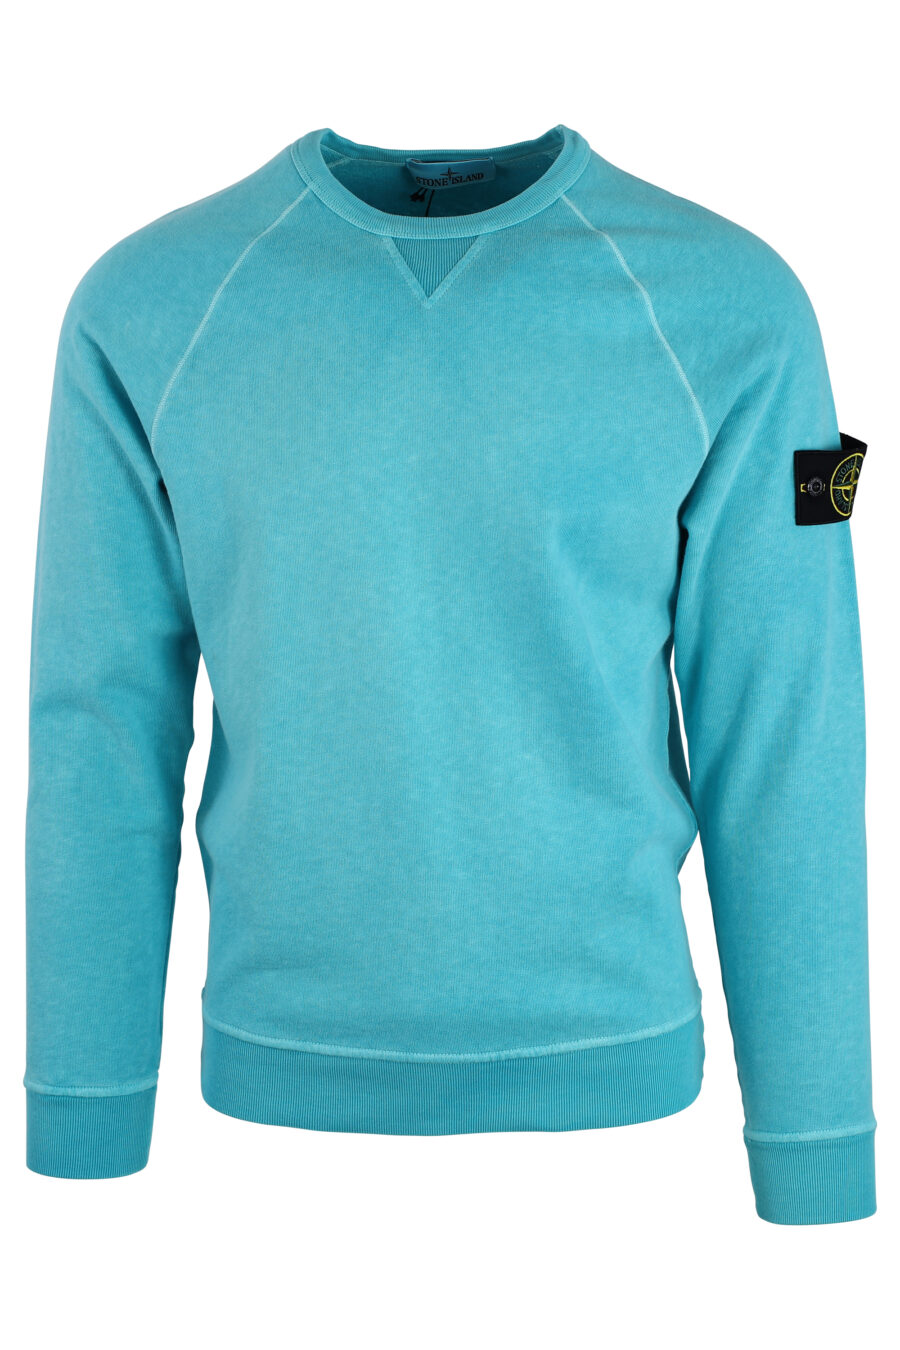 Sky blue sweatshirt with patch - IMG 0248